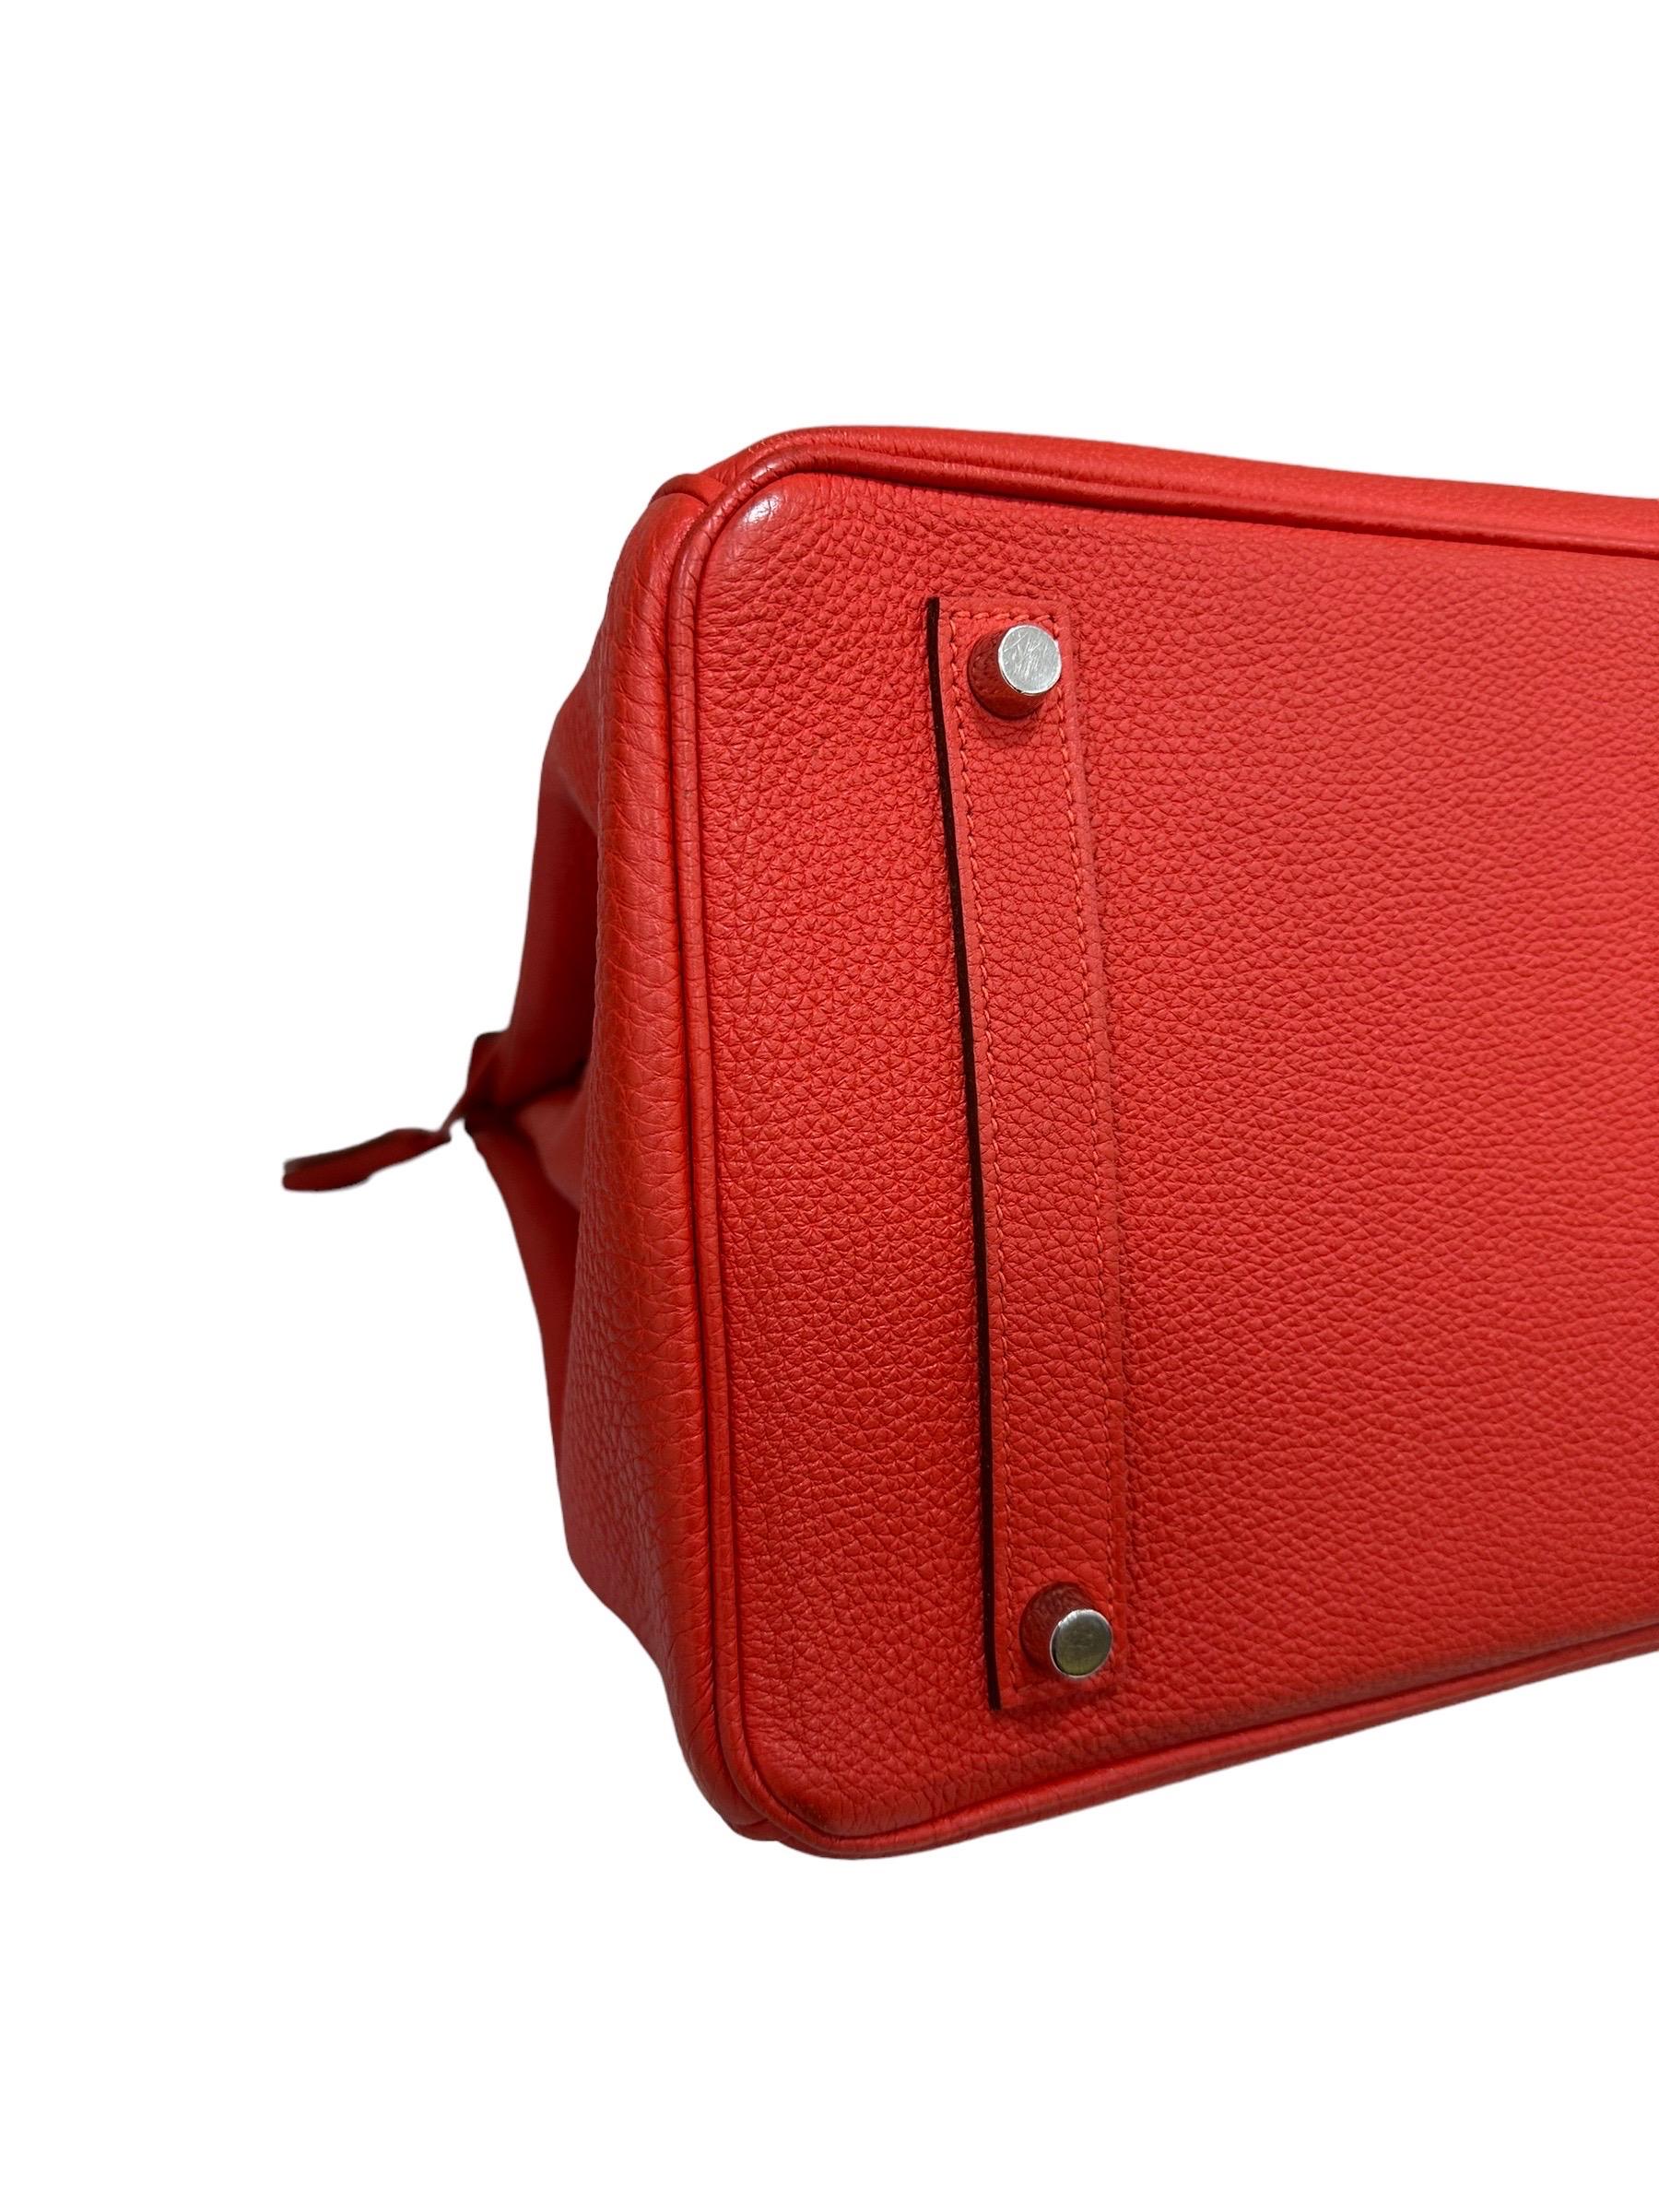 2011 Hermès Birkin 35 Togo Leather Rouge Capucine Top Handle Bag en vente 8